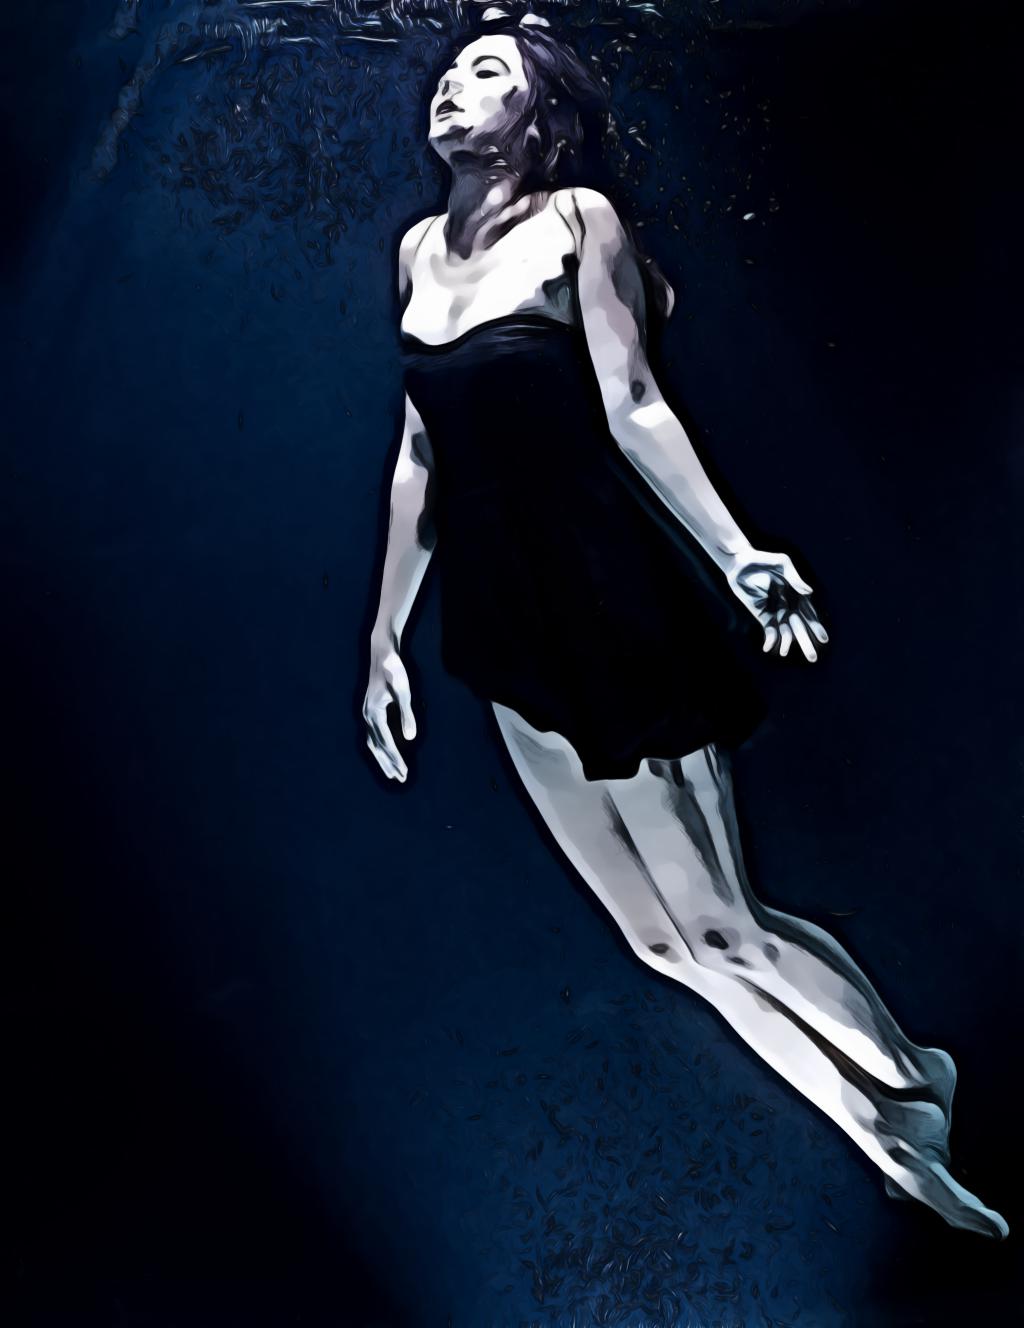 Woman Wearing Short Black Dress Swimming Underwater